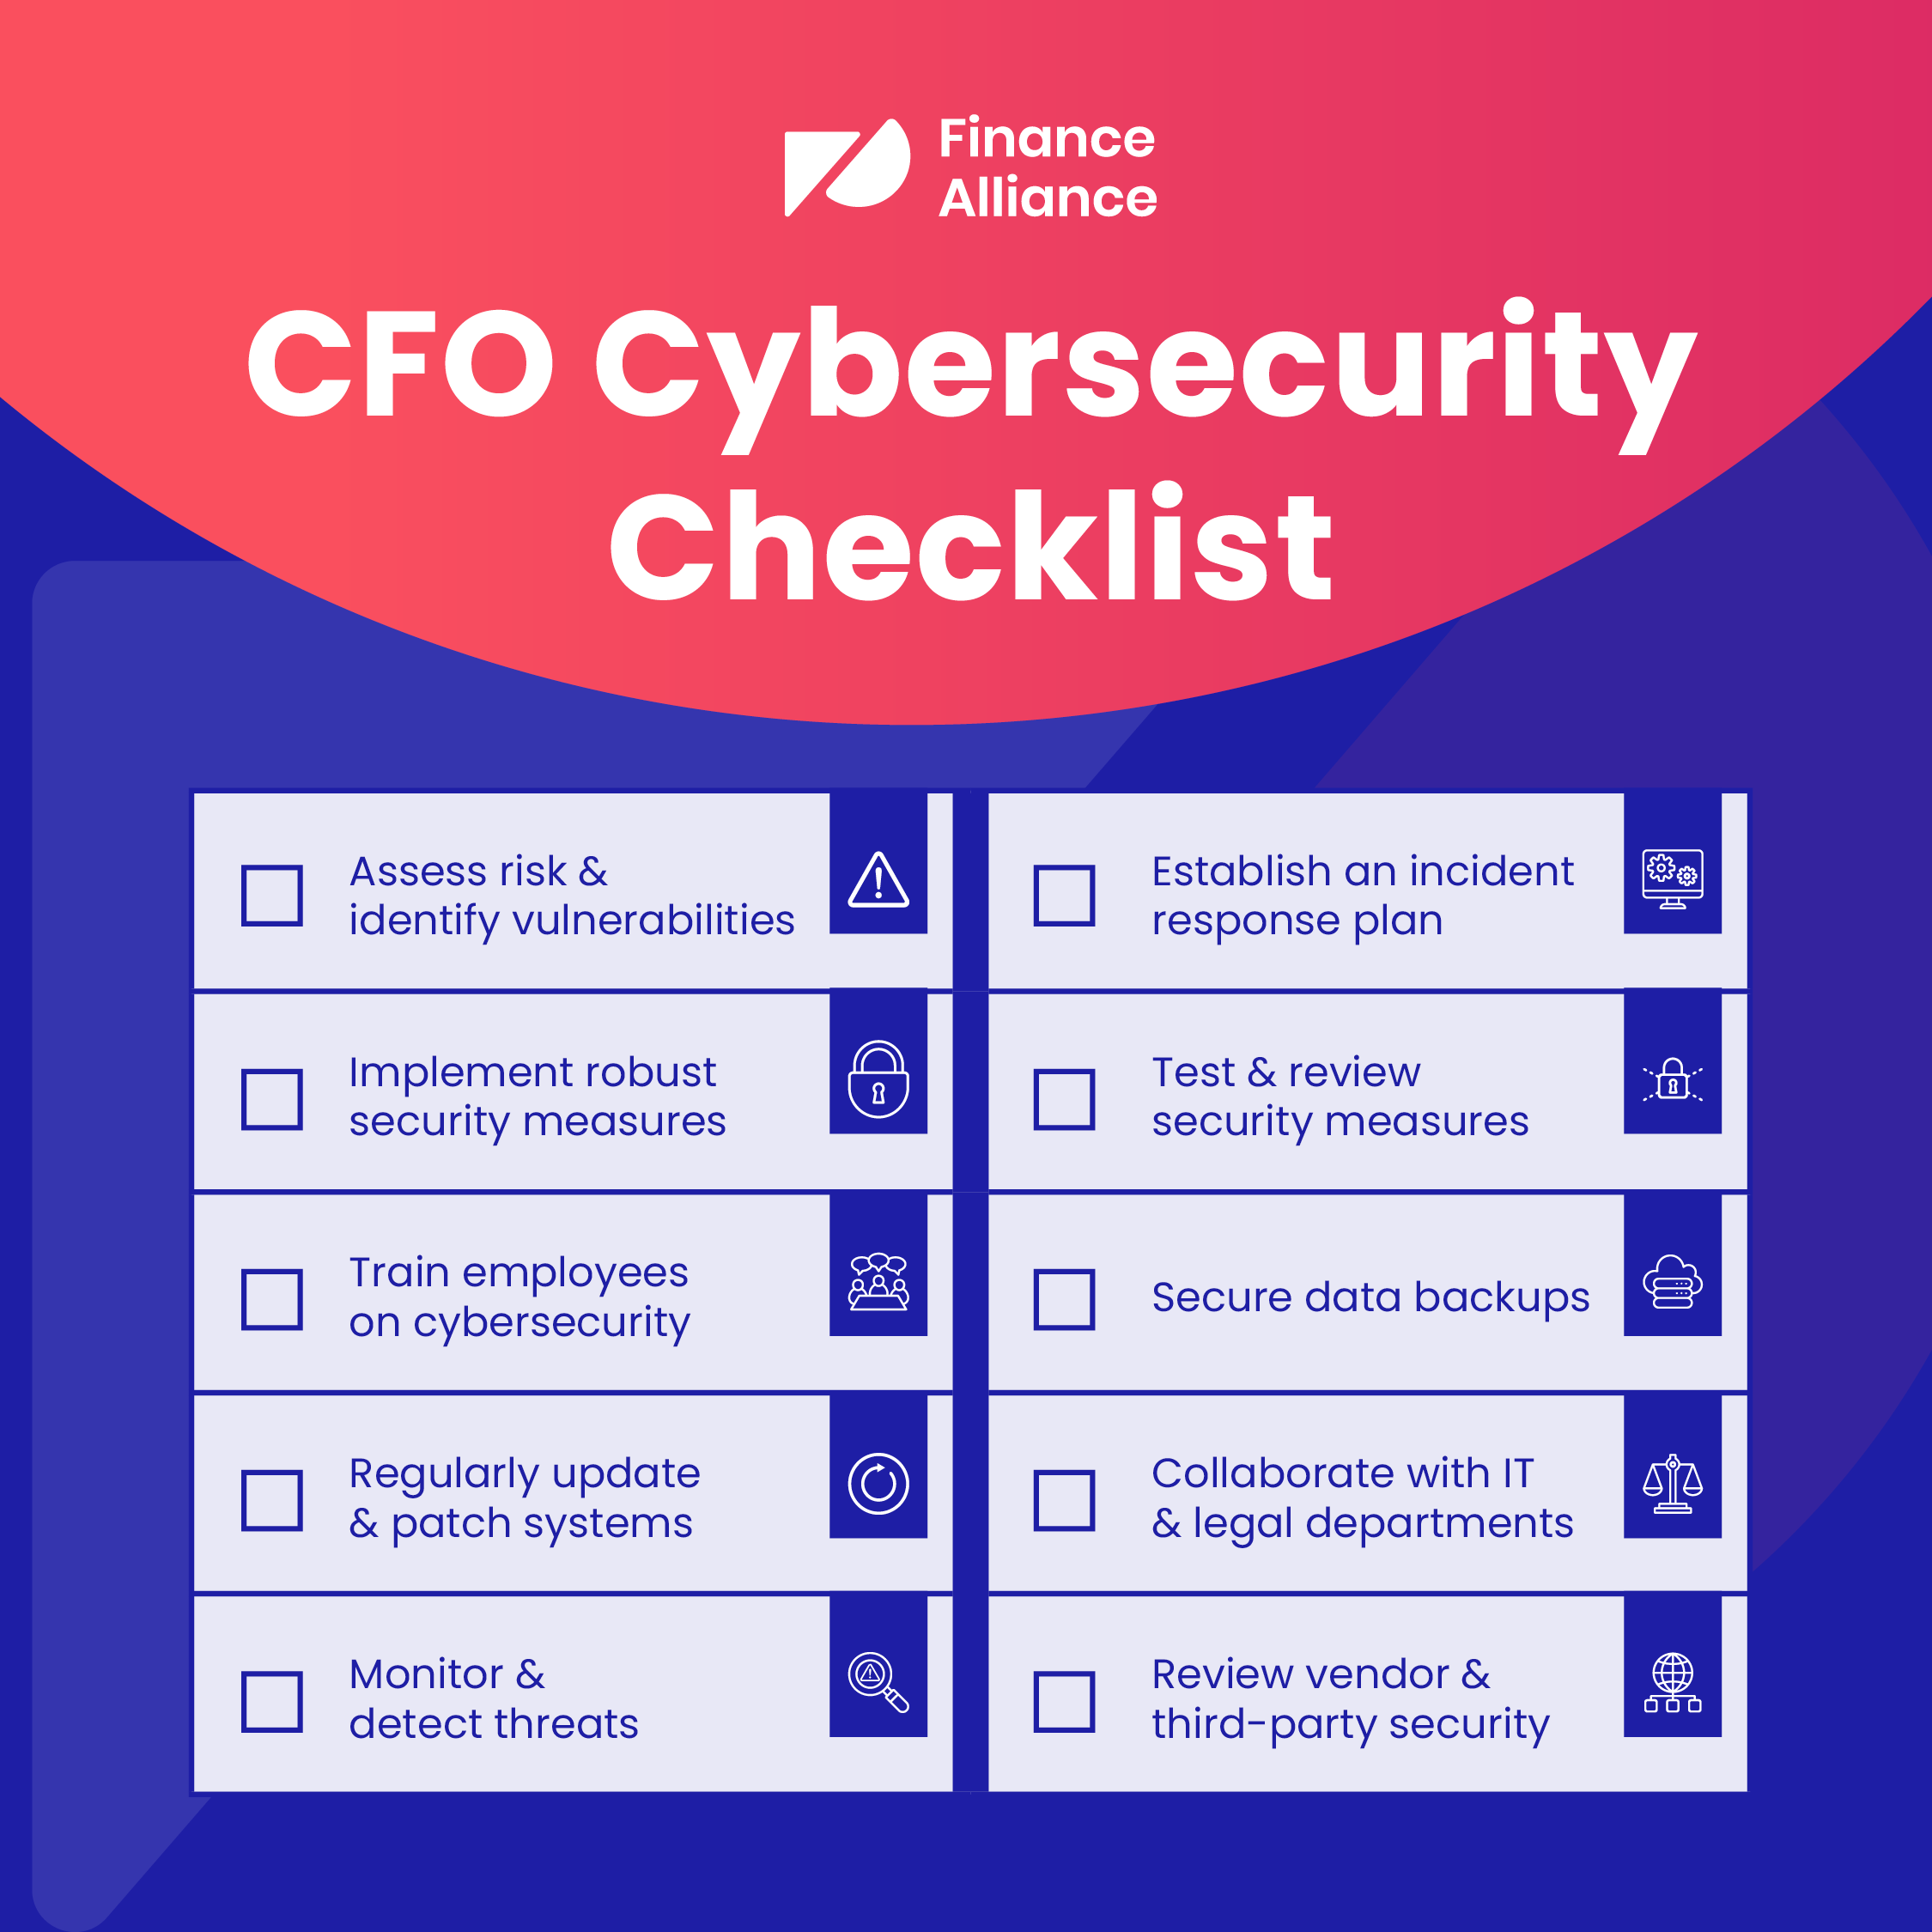 CFO Cybersecurity Checklist